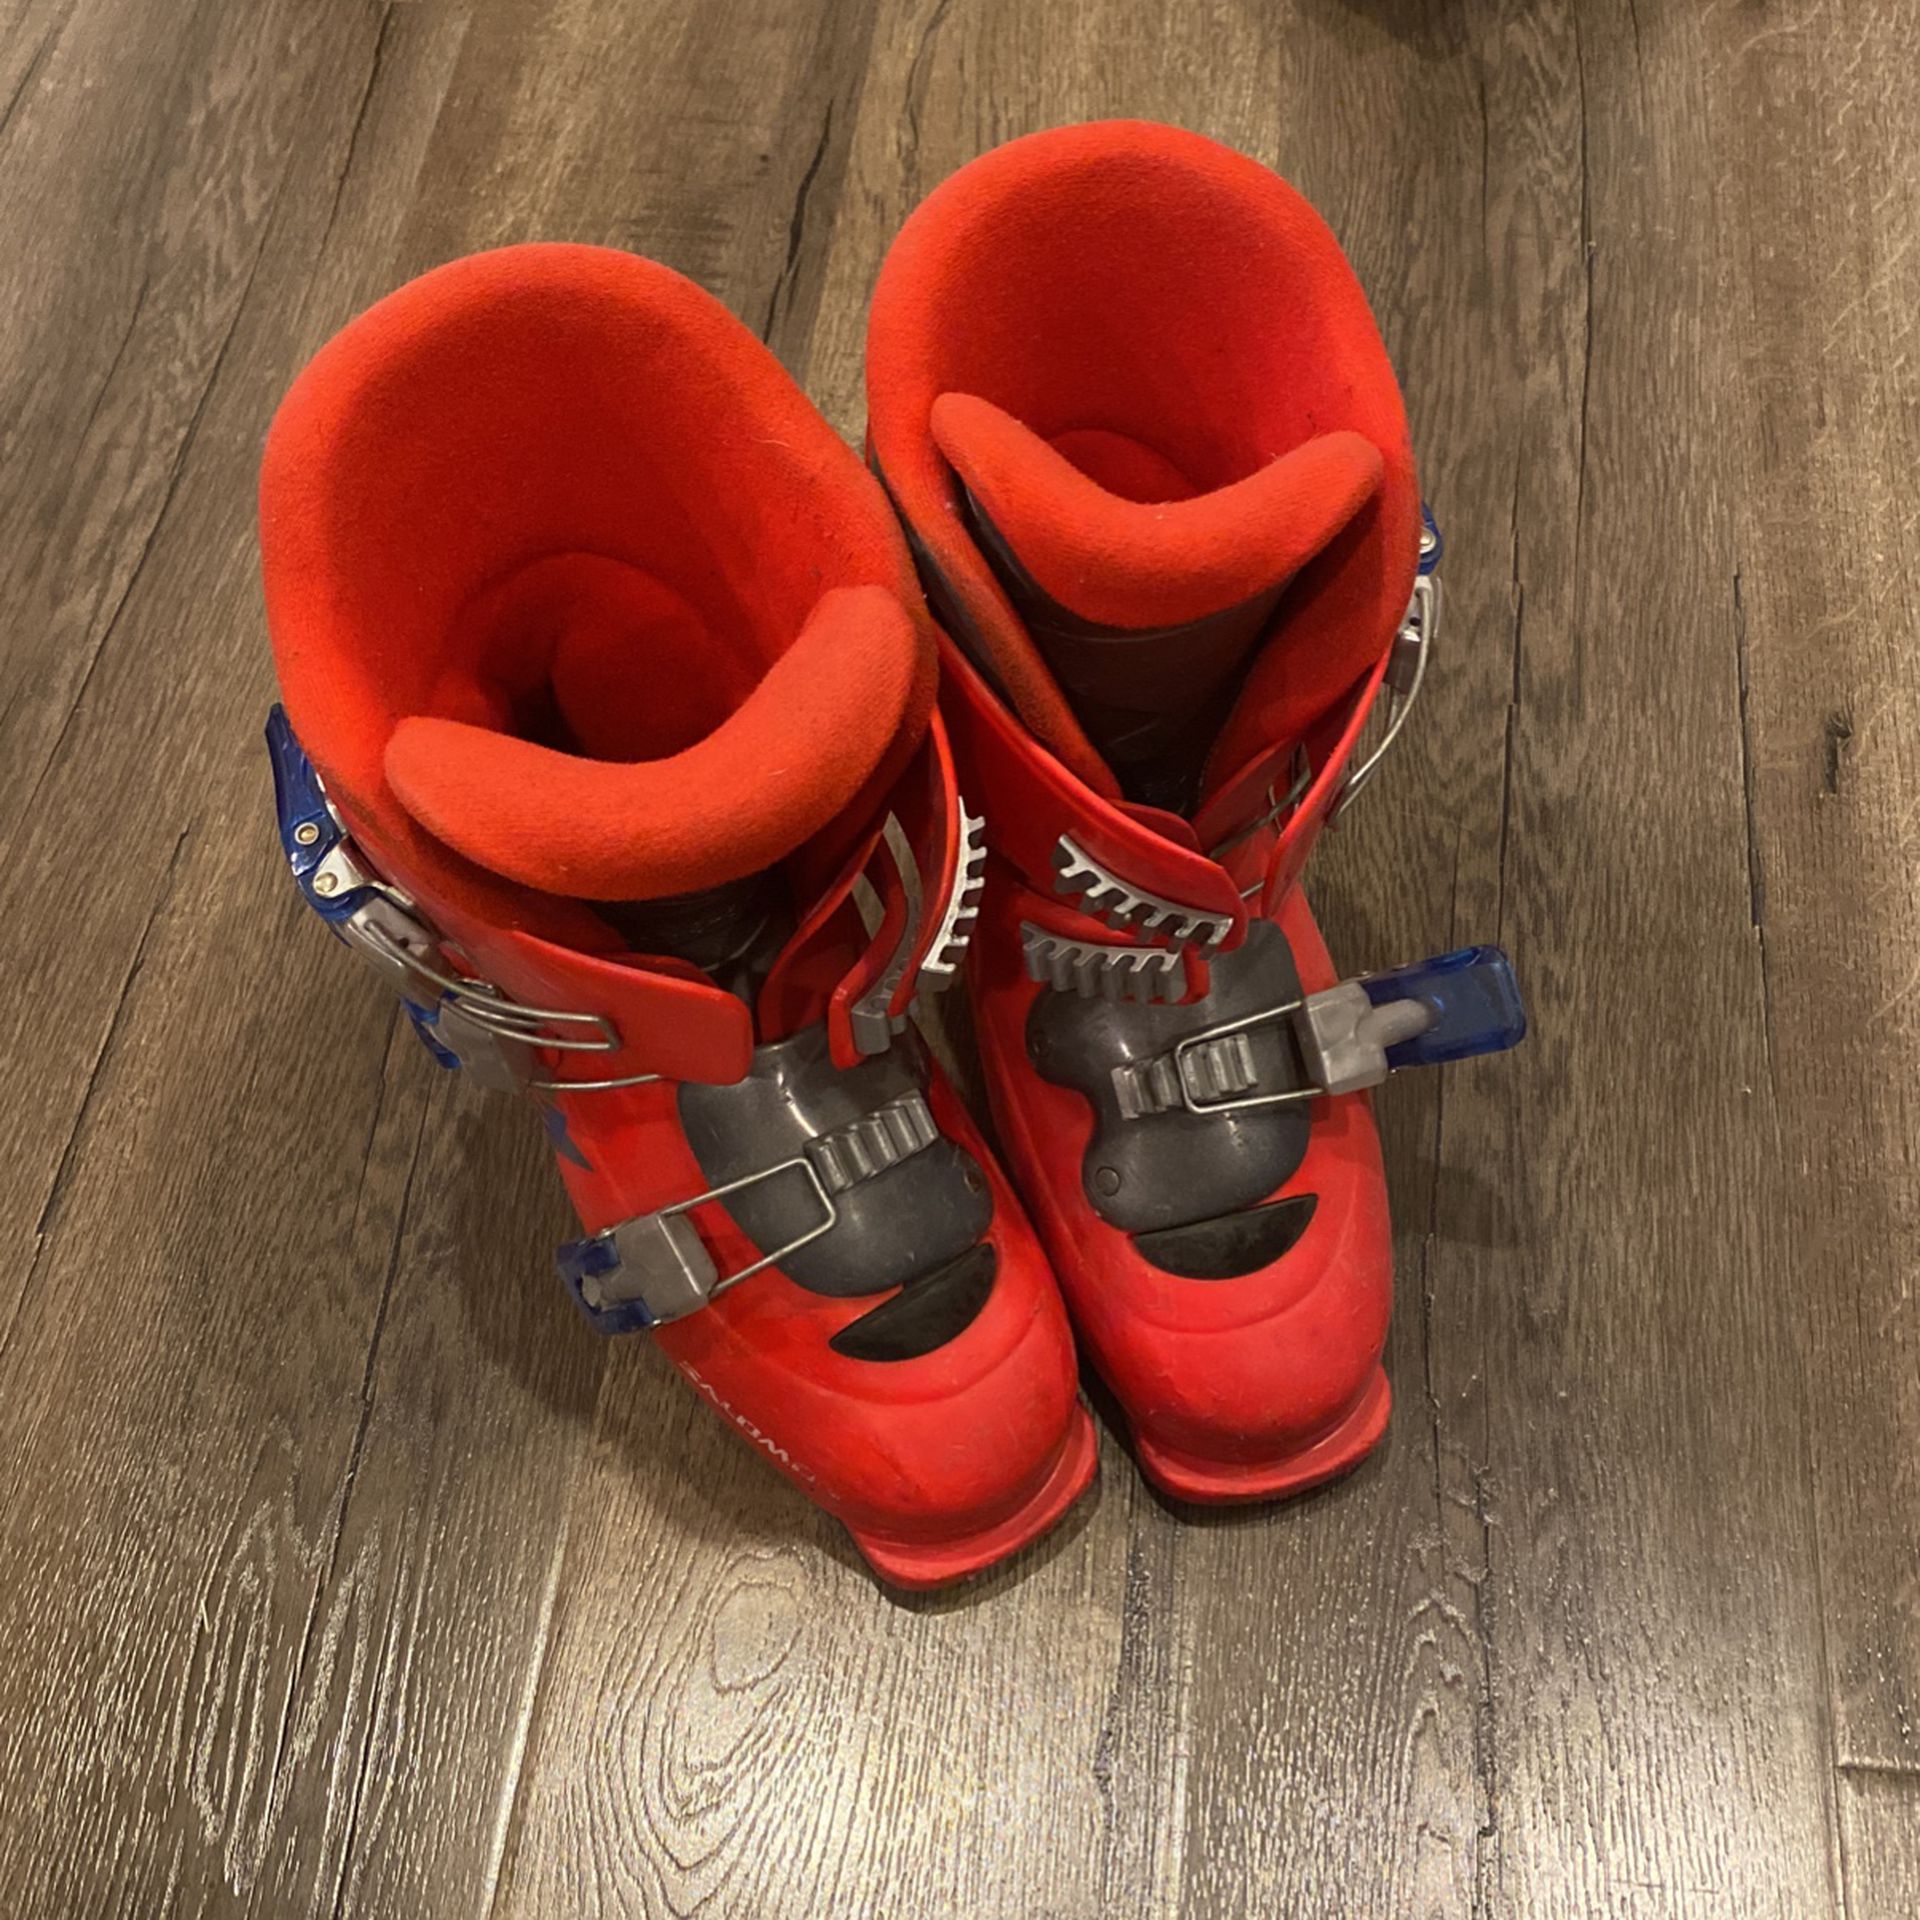 Salomon Performa Ski Boots Size 23, UK 4, US 4 1/2, Mens 36 2/3